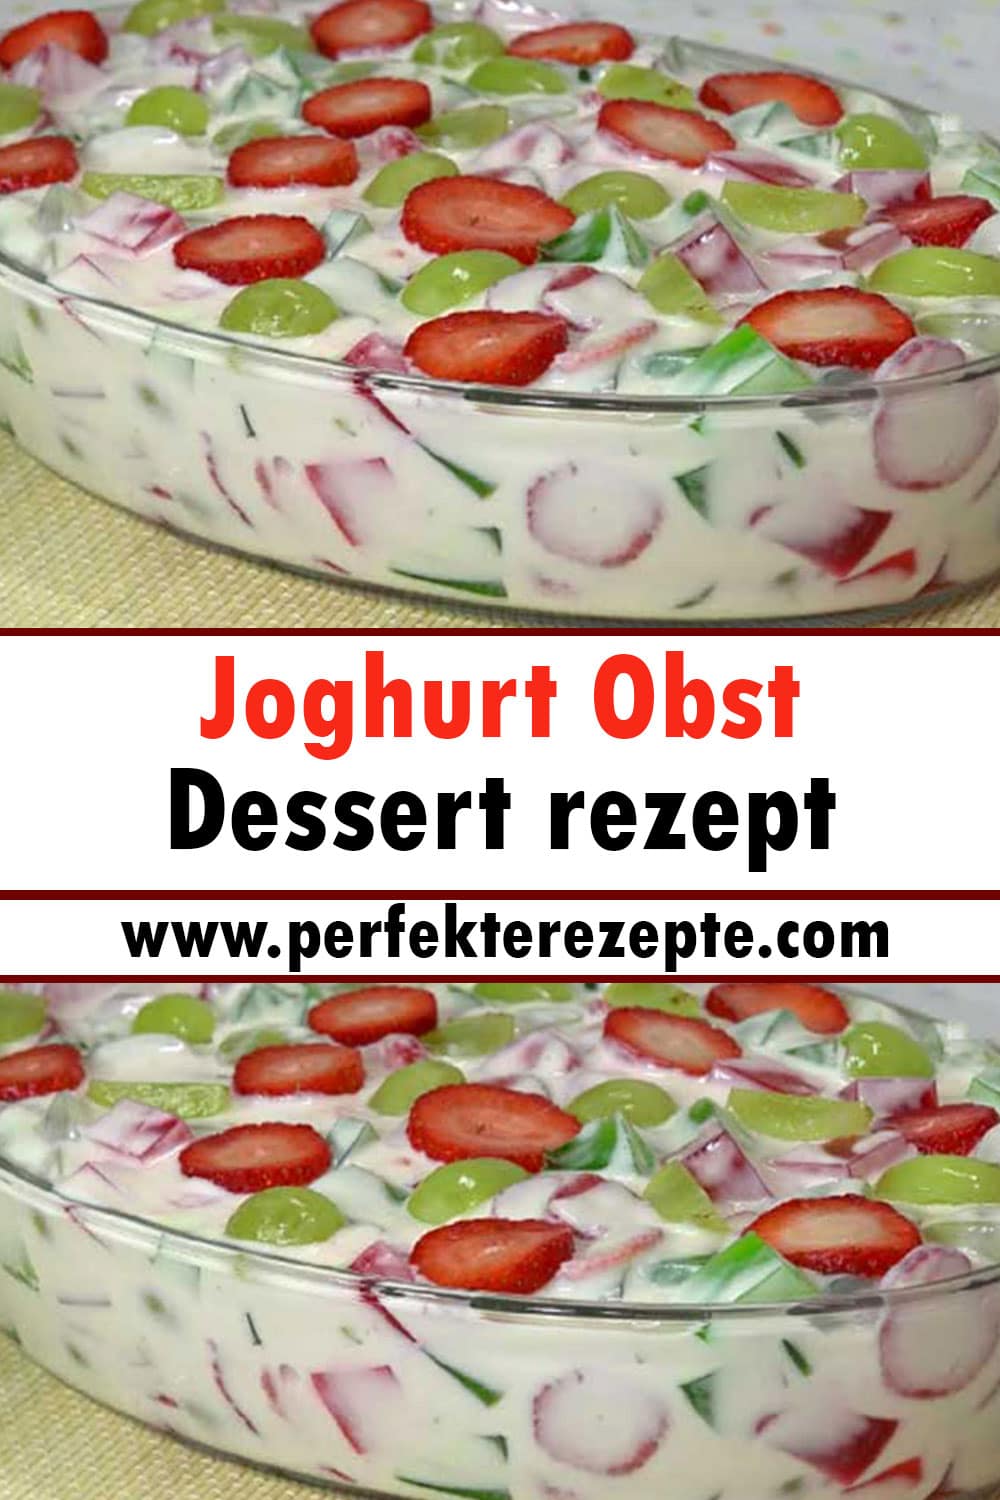 Joghurt Obst Dessert rezept